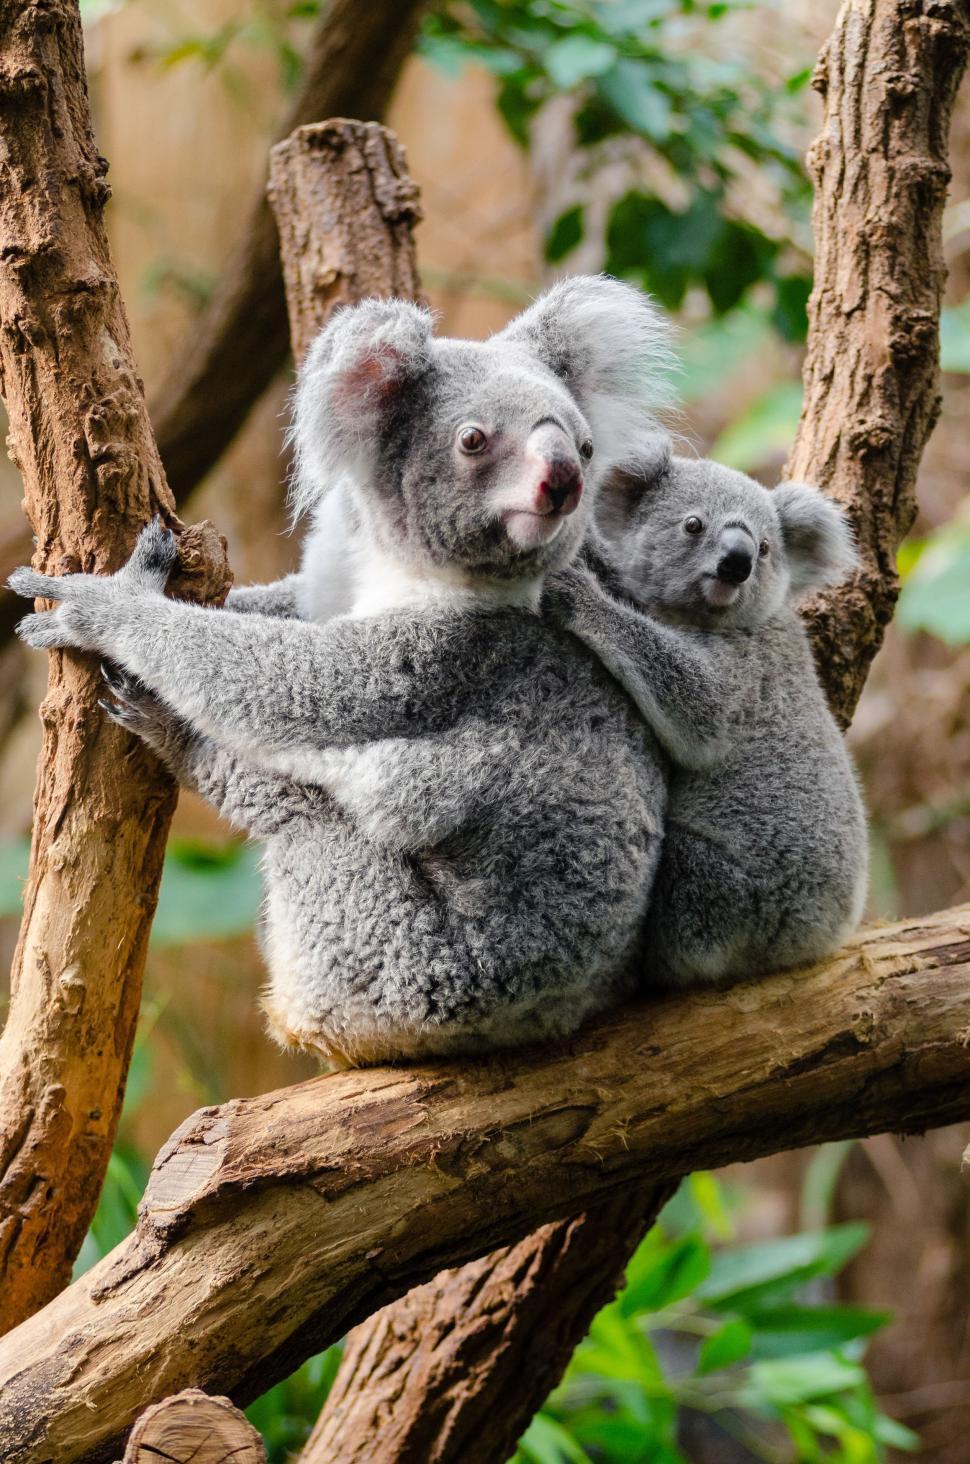 Free Image of Koala Bear with her baby 